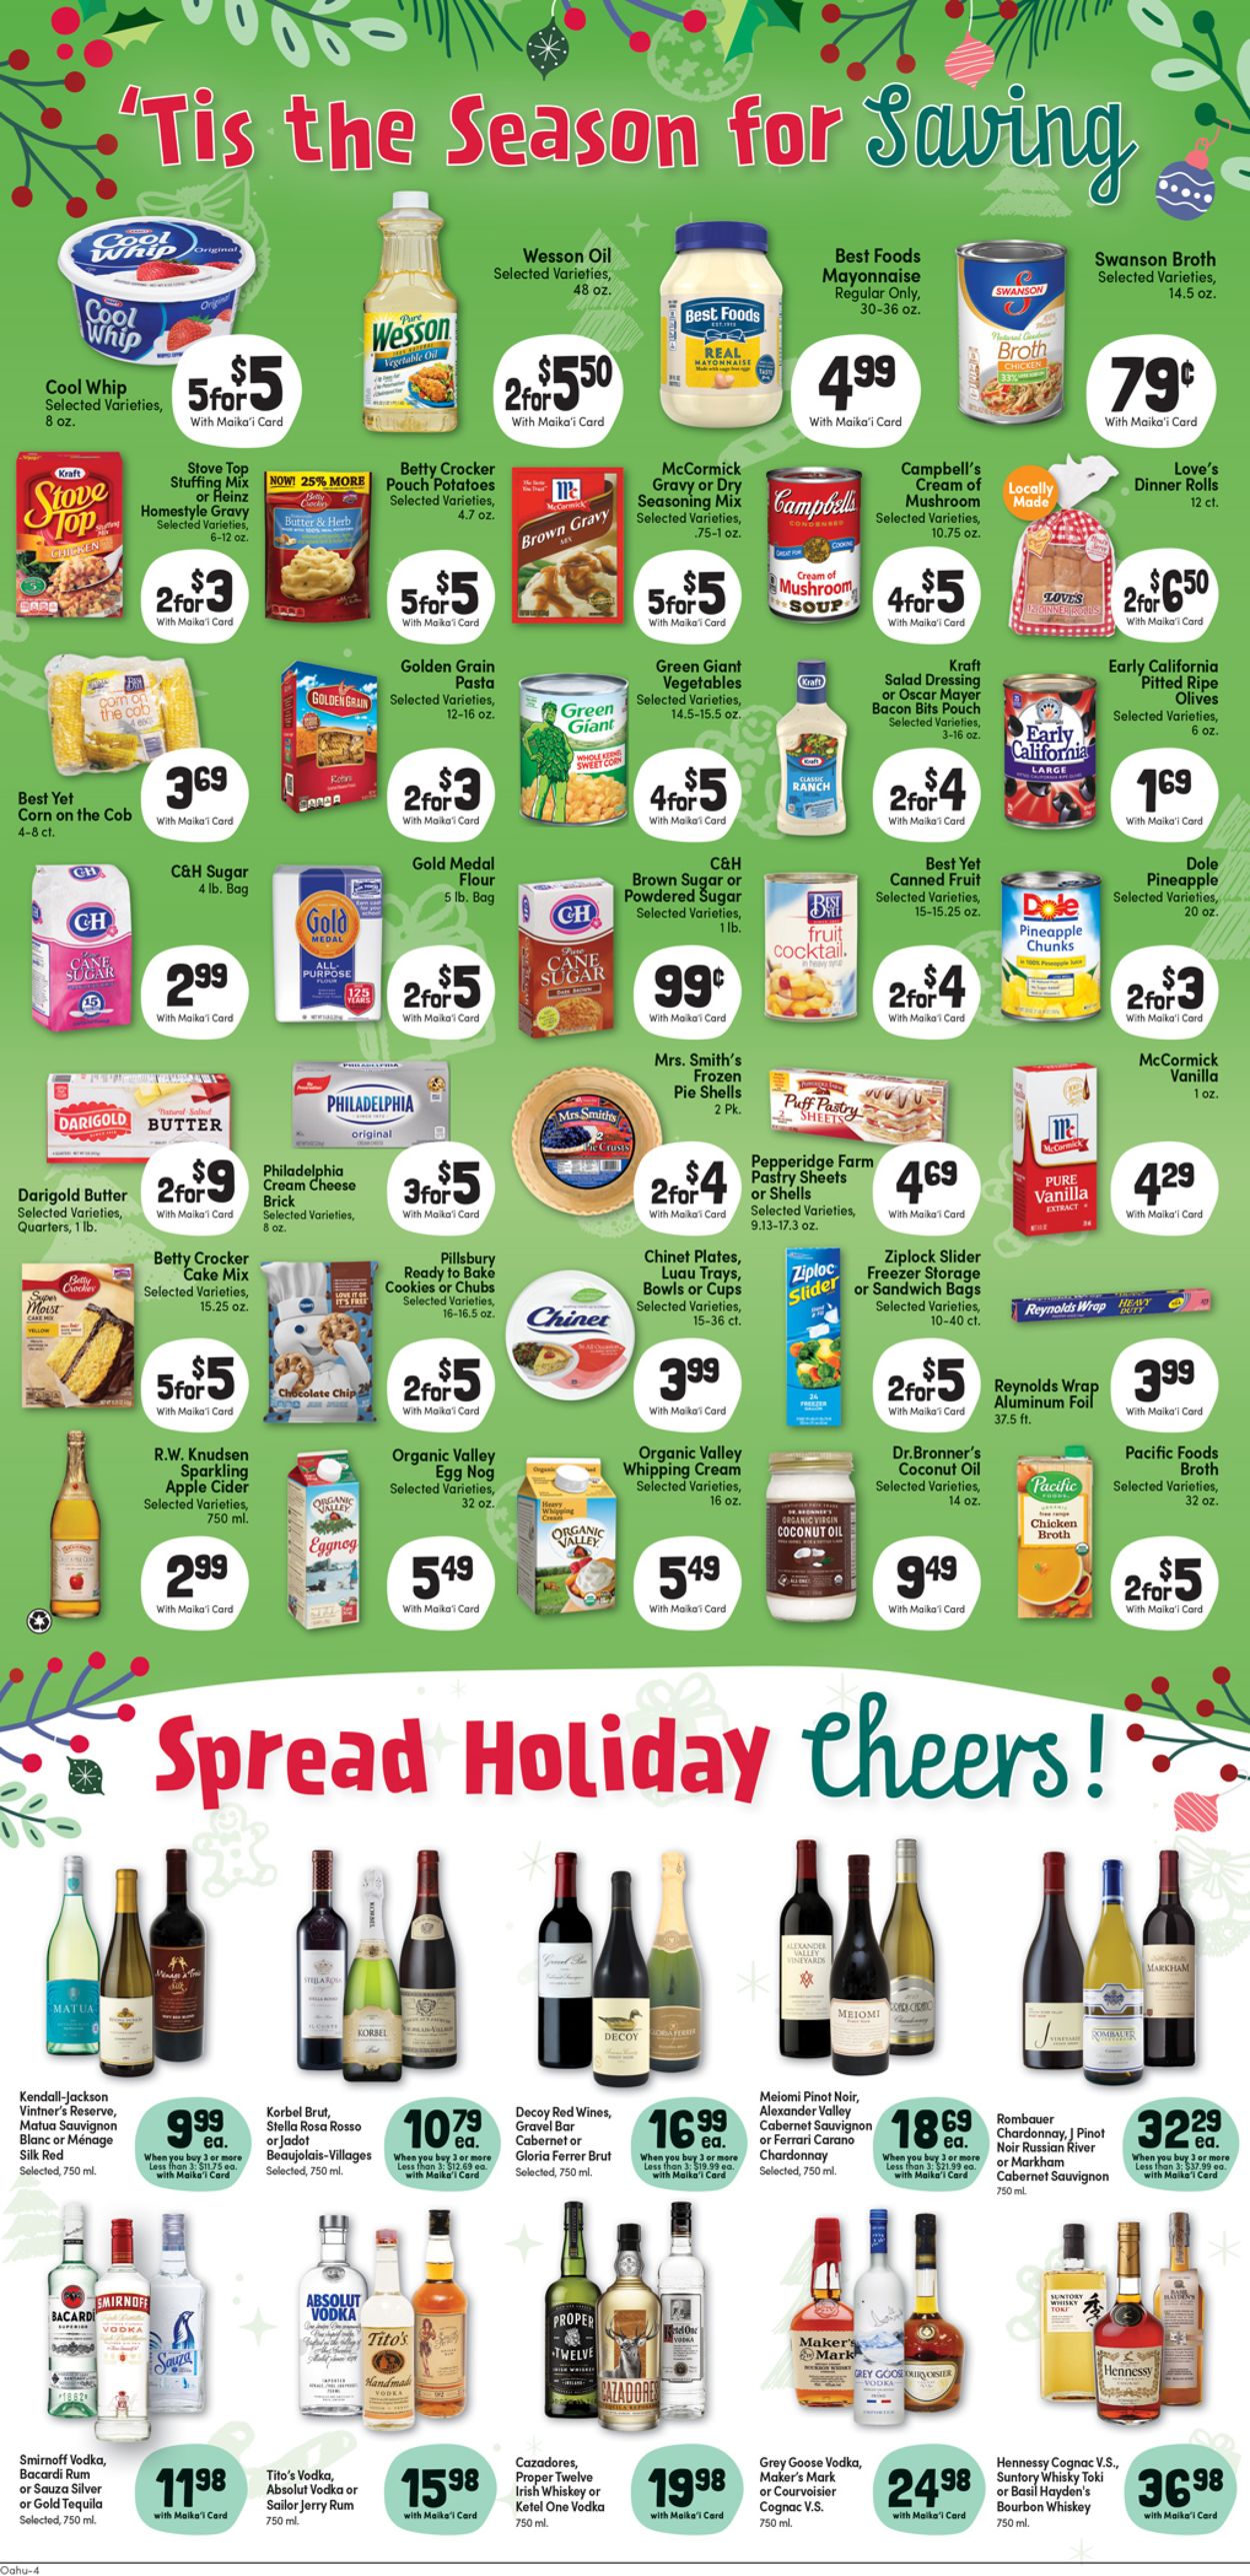 Catalogue Foodland - Holiday Ad 2019 from 12/18/2019